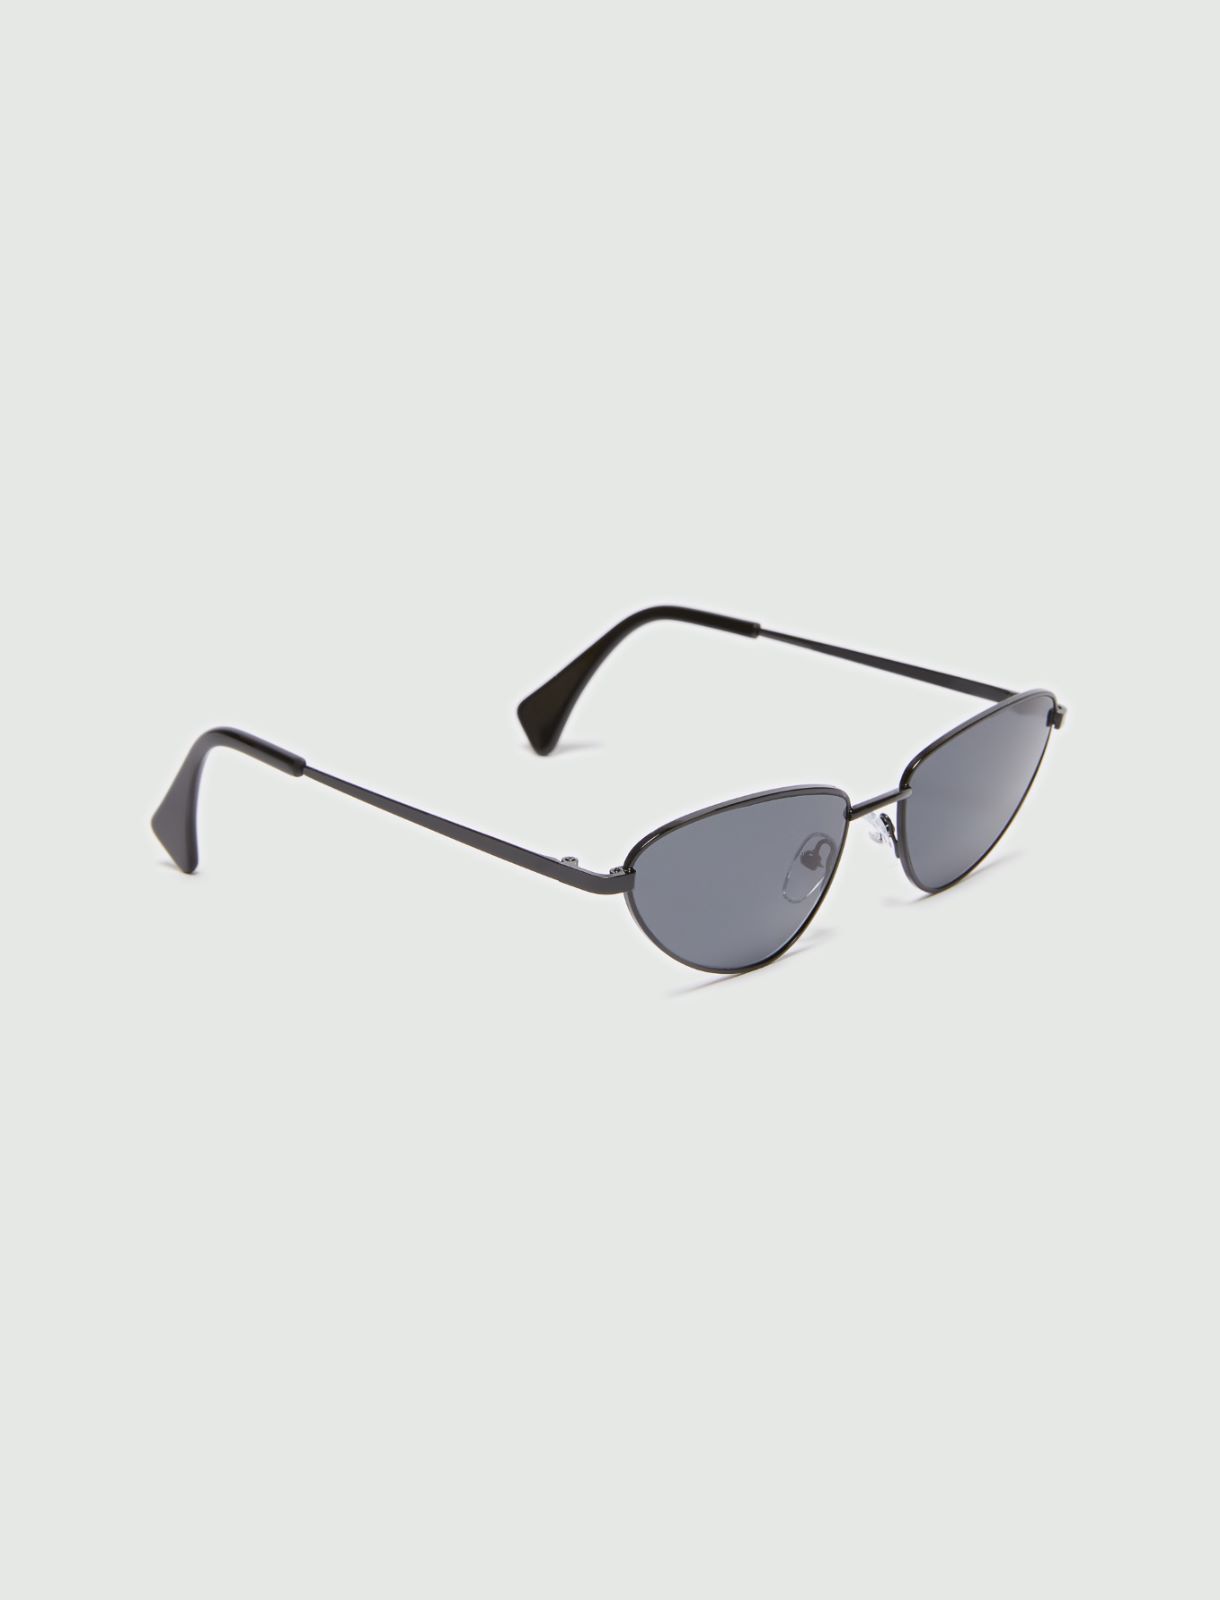 Metal sunglasses - Black - Marella - 2